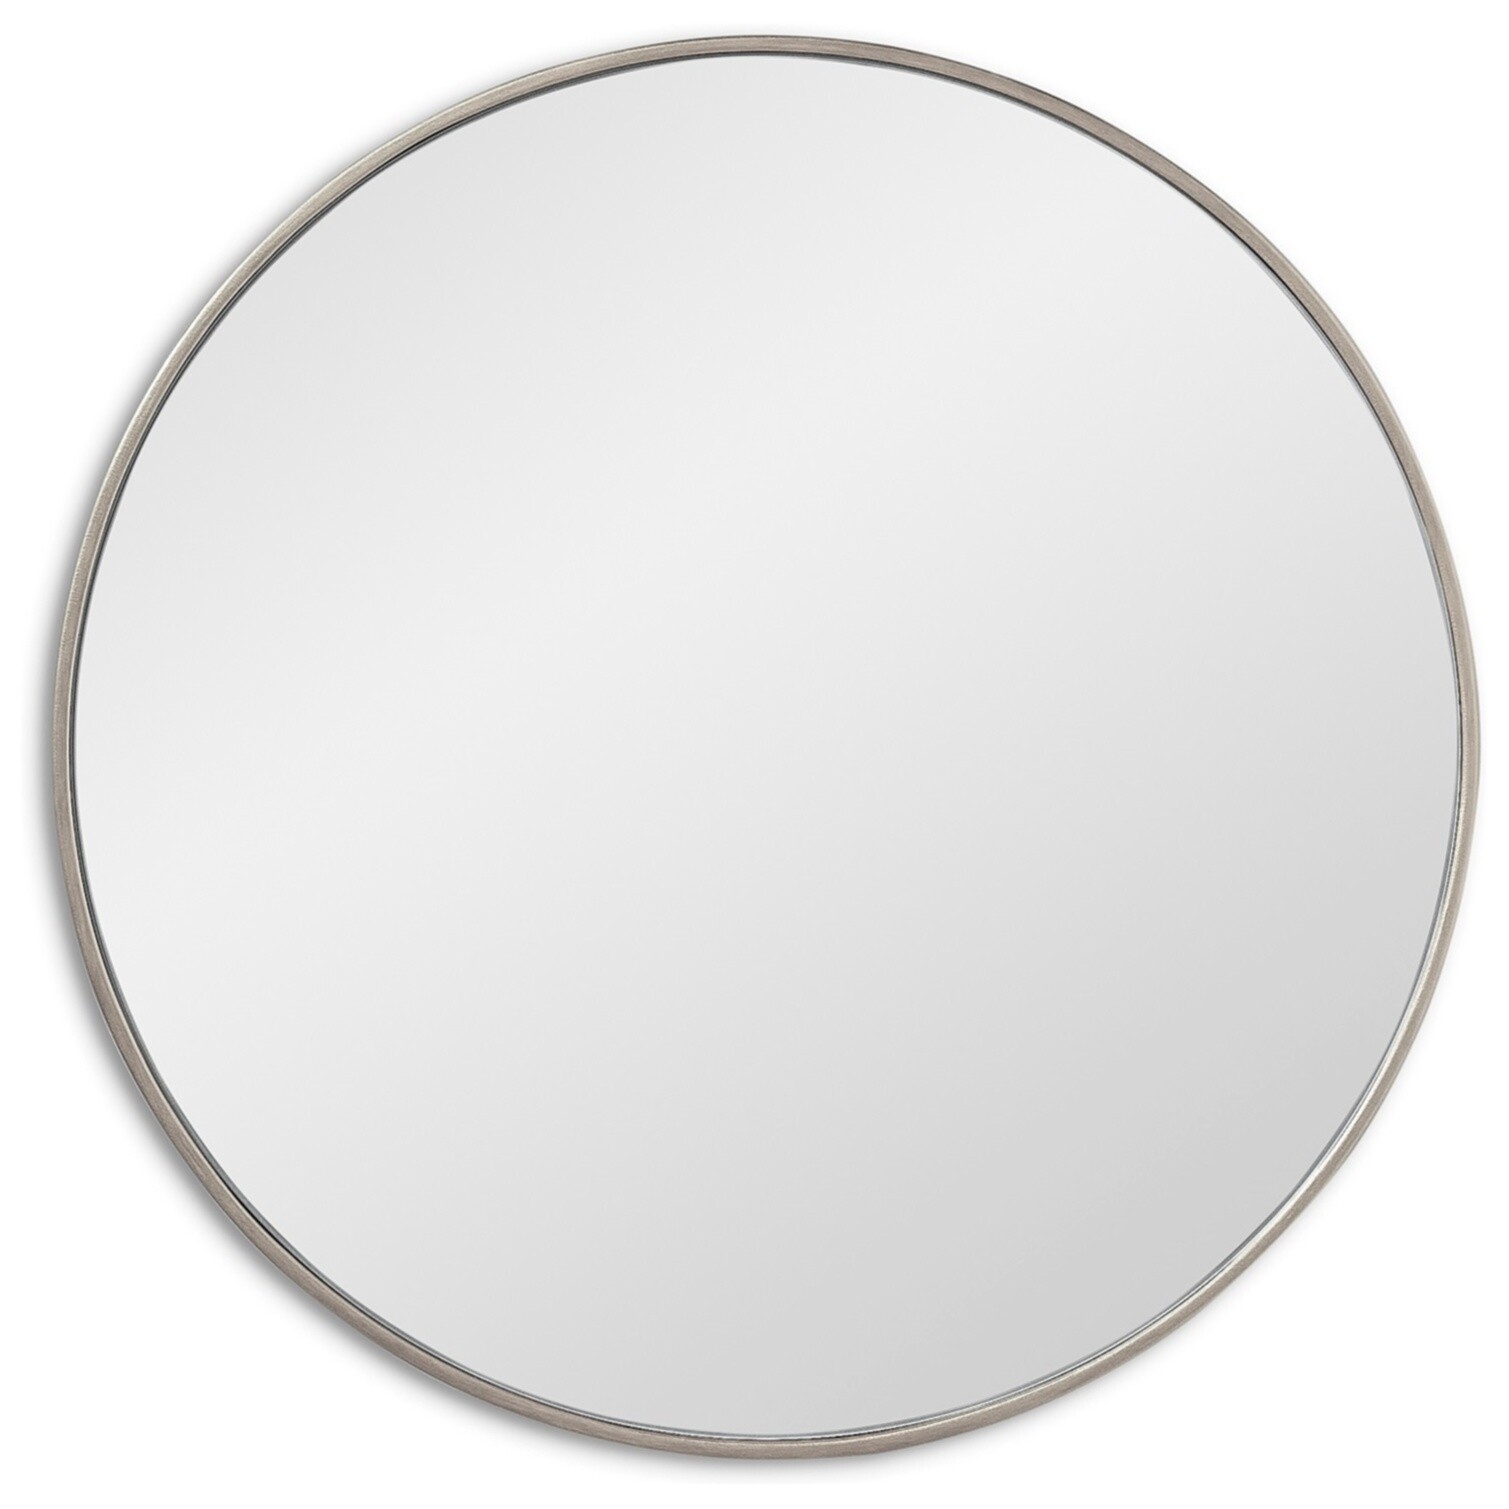 Зеркало настенное круглое в тонкой раме 70х70 см серебро Ala M